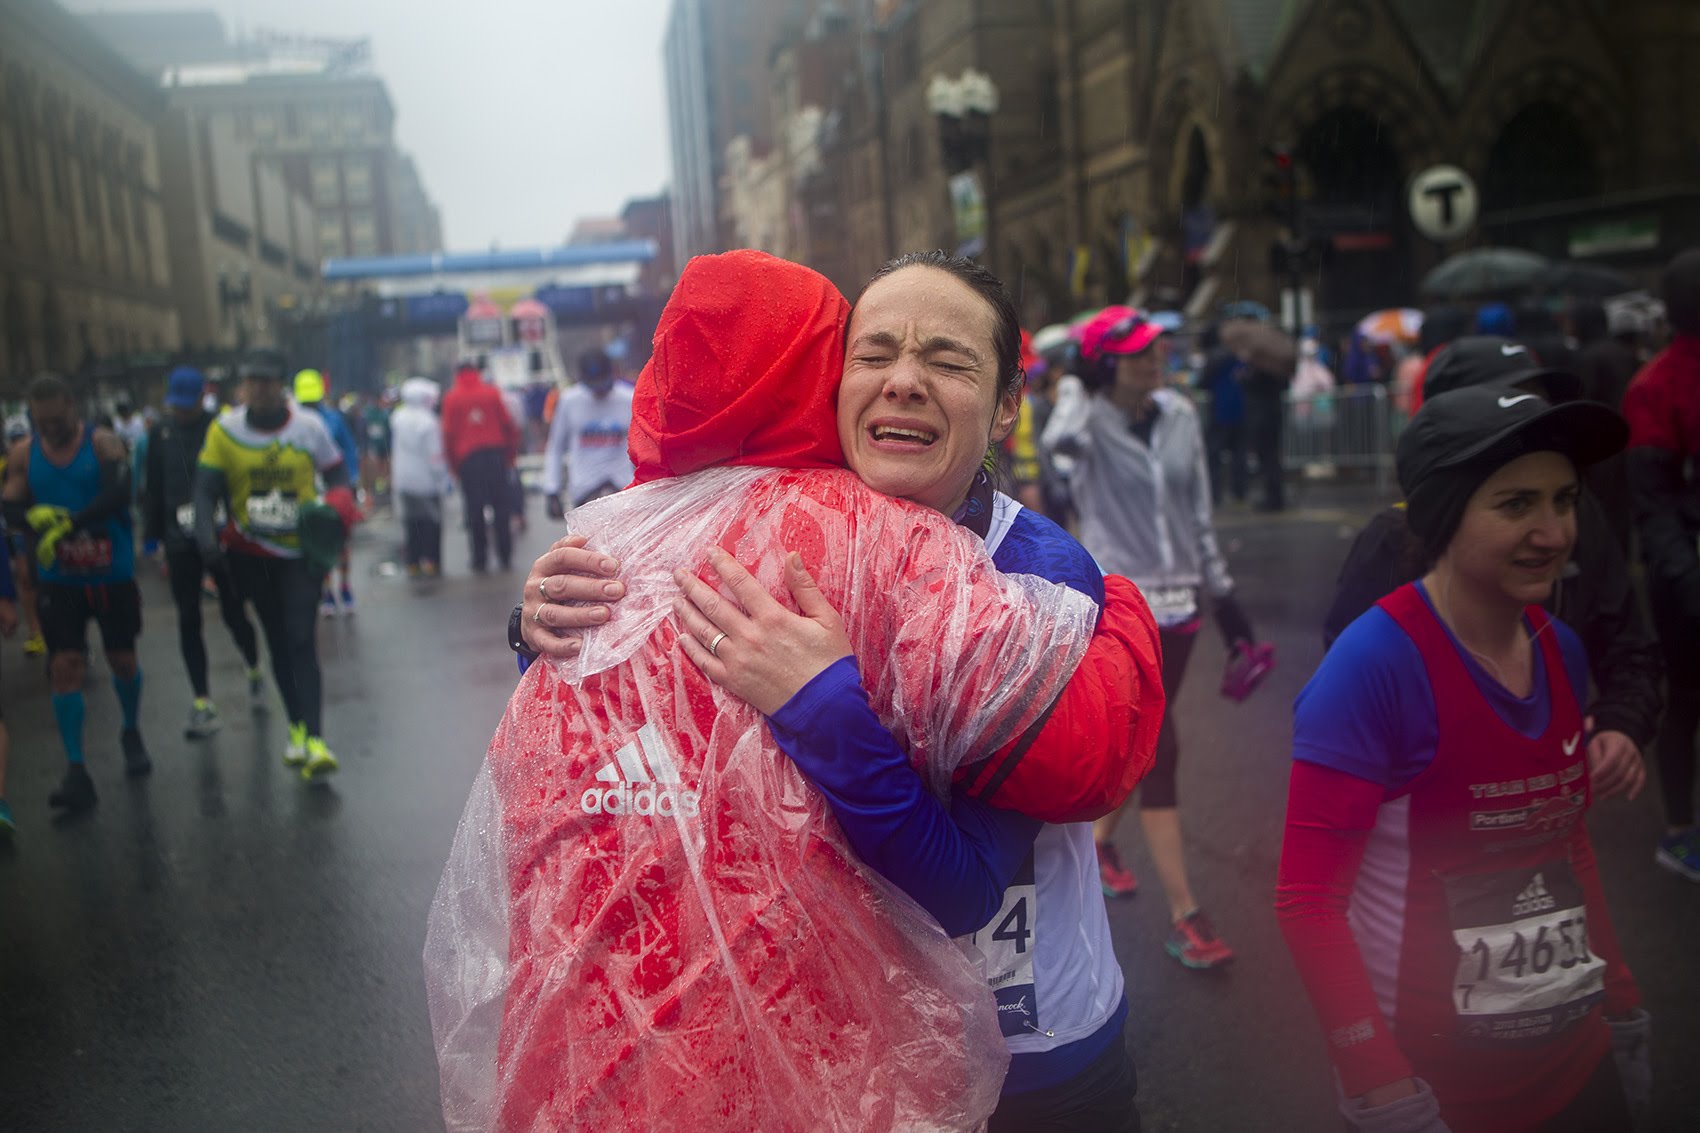 Alexandra Barak of Isreal gets a congradulatory hug from Boston Marathon volunteer Angela Coulombe after finishing. (Jesse Costa/WBUR)